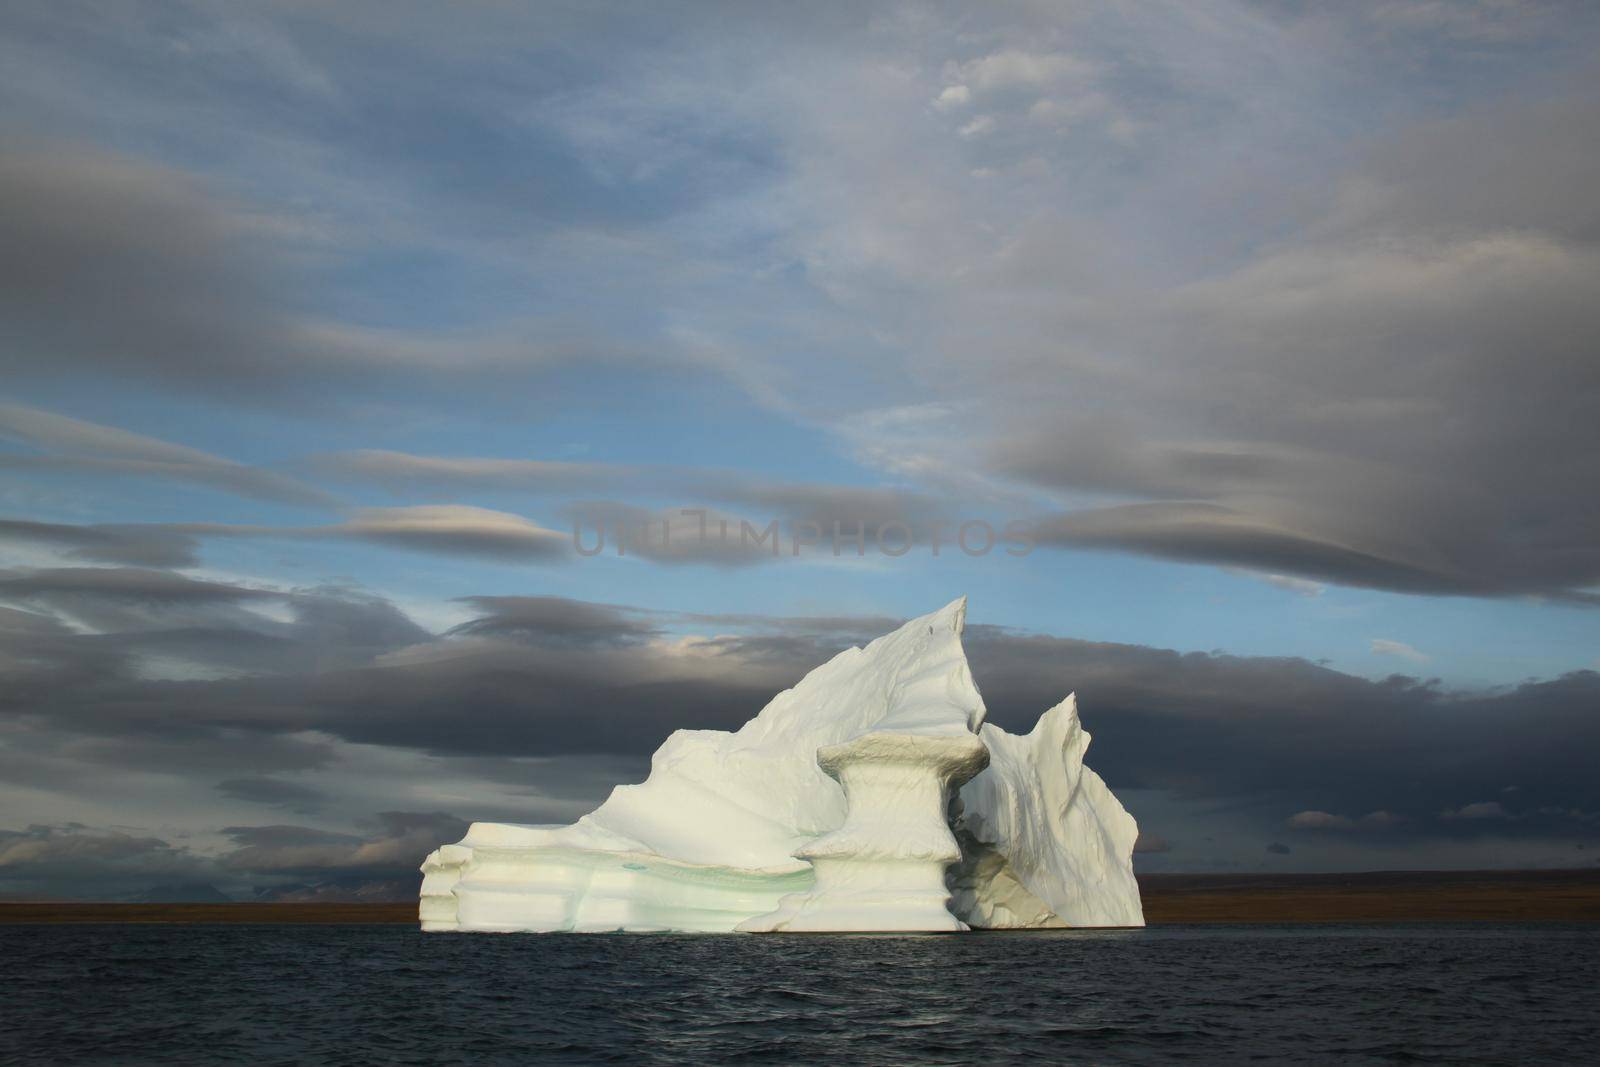 Stranded tabular iceberg and ice near evening in arctic landscape, near Pond Inlet, Nunavut by Granchinho